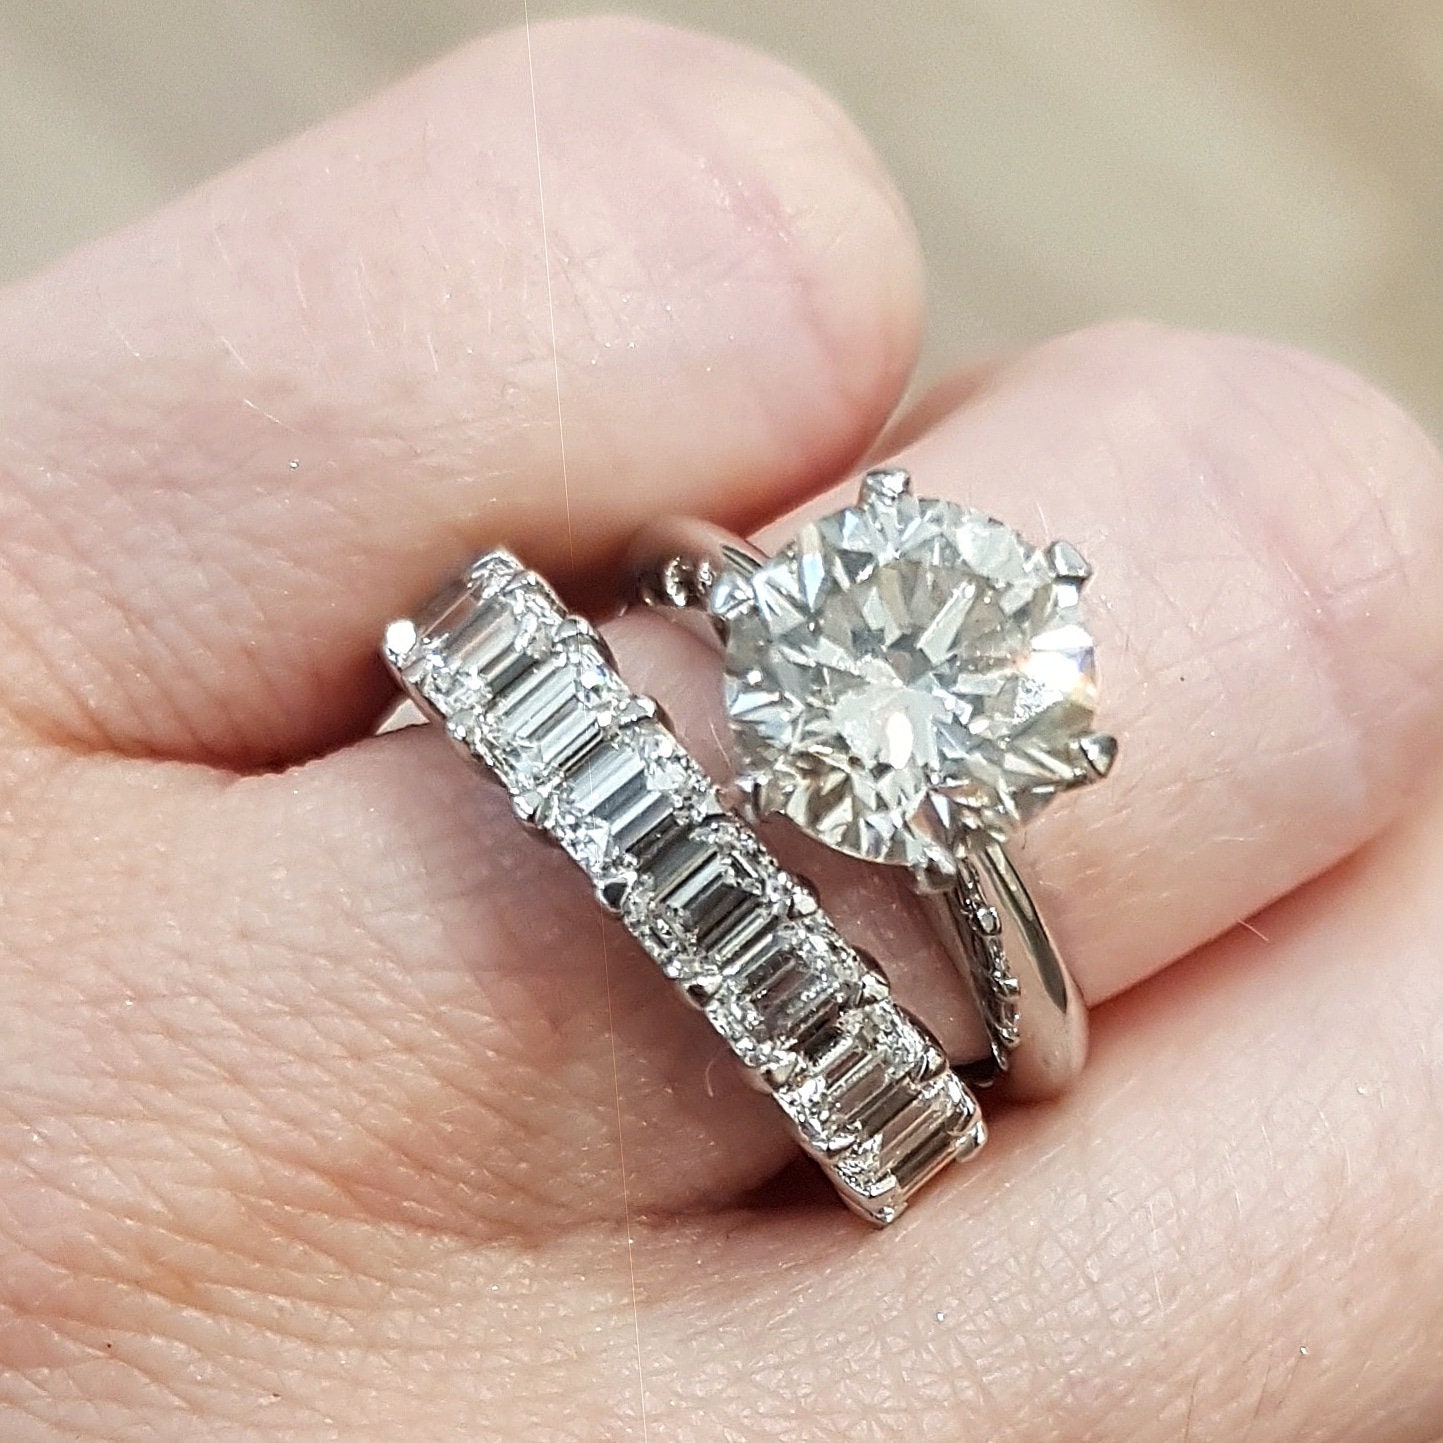 3 50ct Diamond Emerald Cut 14k White Gold Fn Engagement Ring Wedding Band Set Ebay